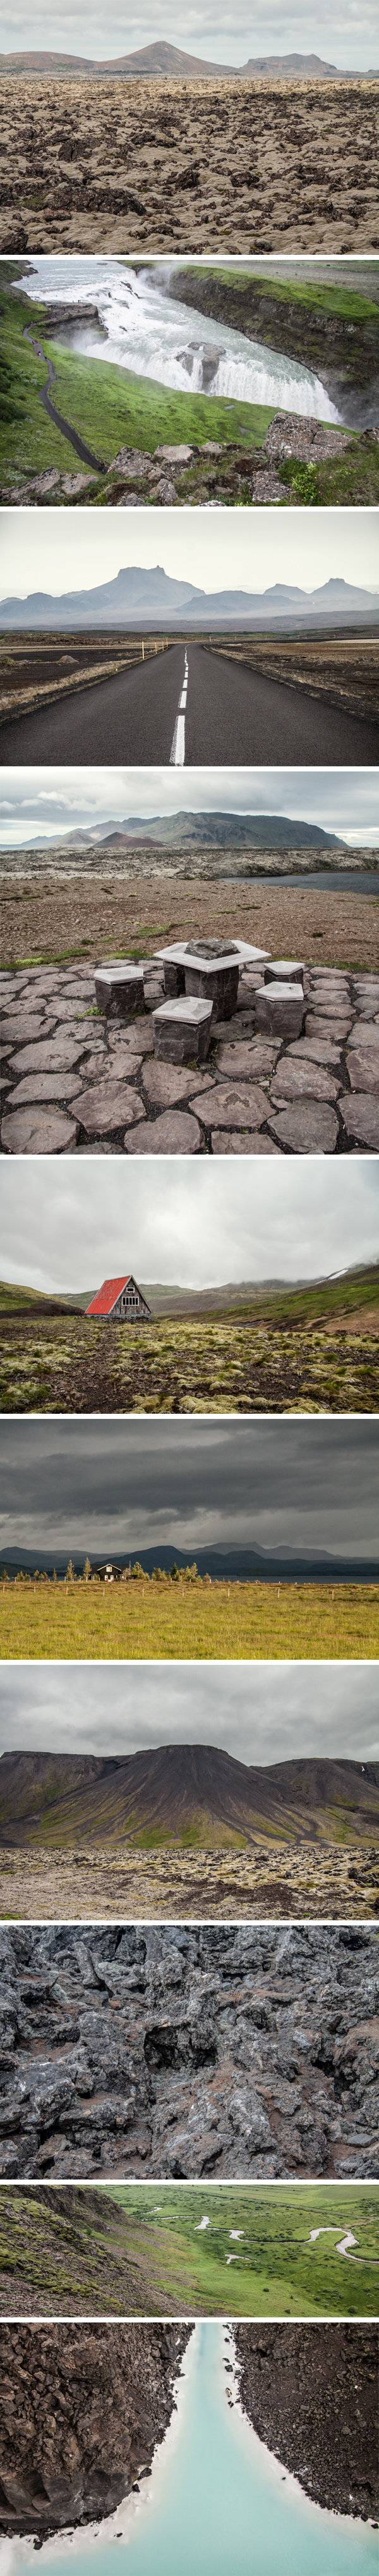 Iceland Free Photos 0001